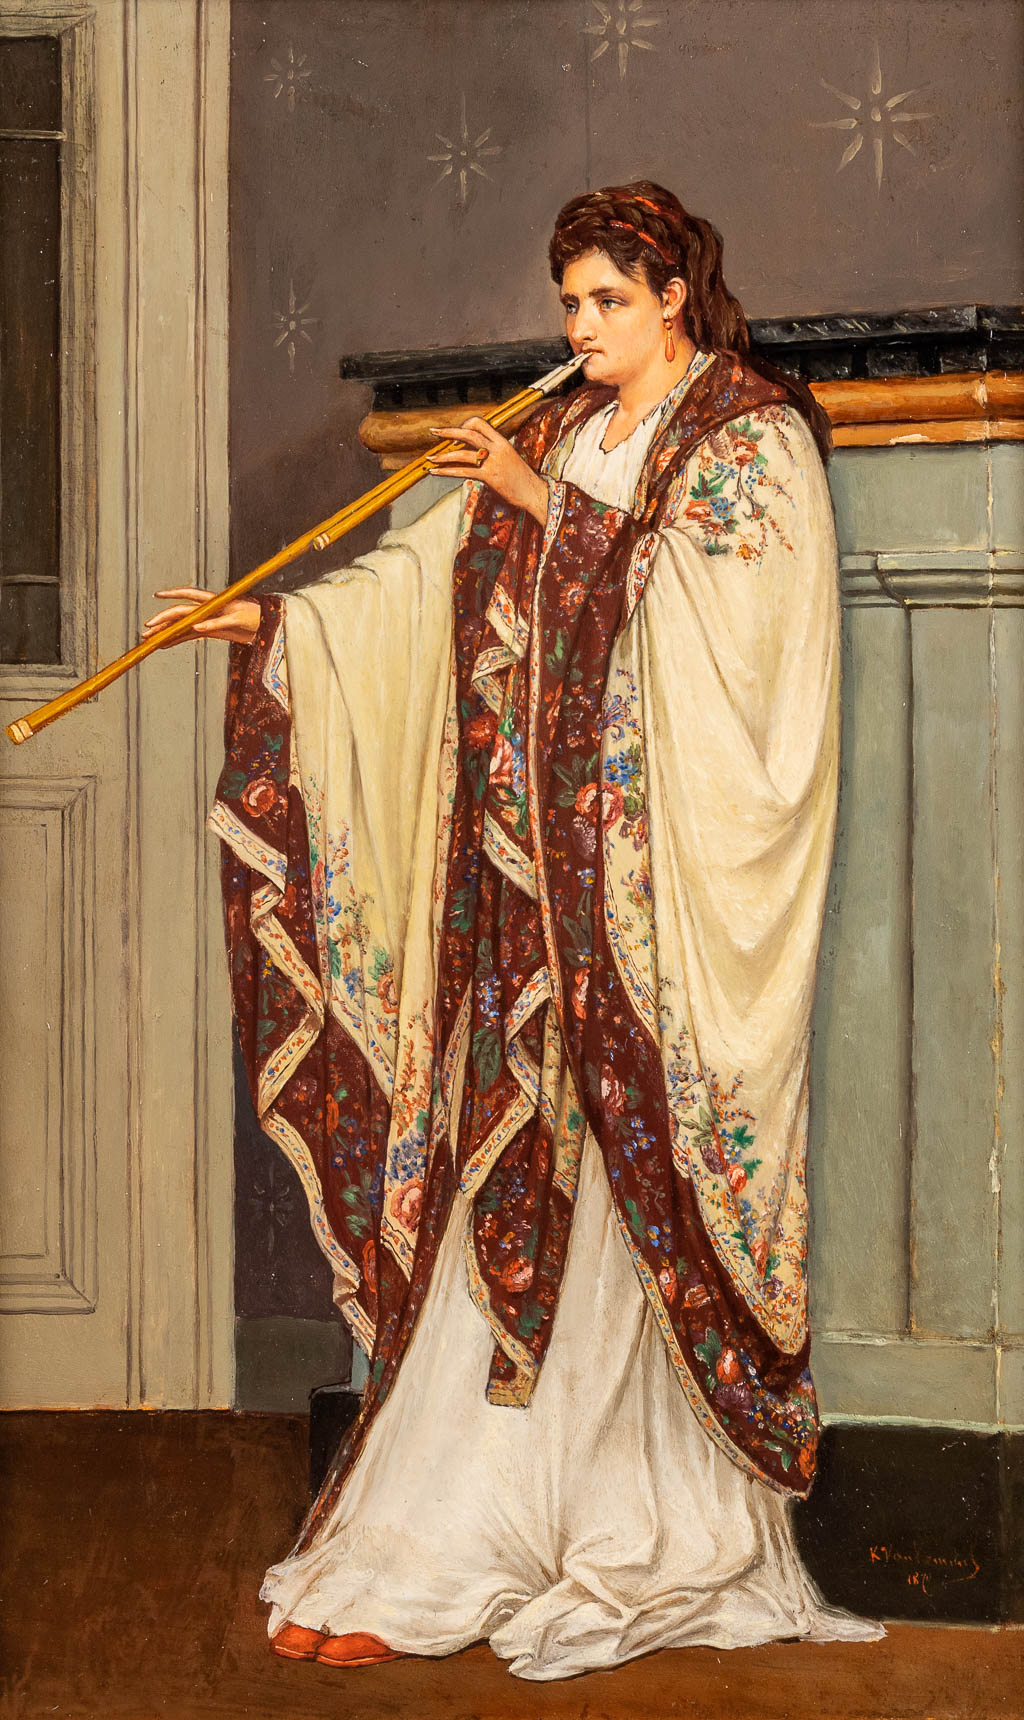 Karel VAN KEMMEL (1834-1885) 'Lady with a flute' oil on panel. 1870 (W:39 x H:59 cm)